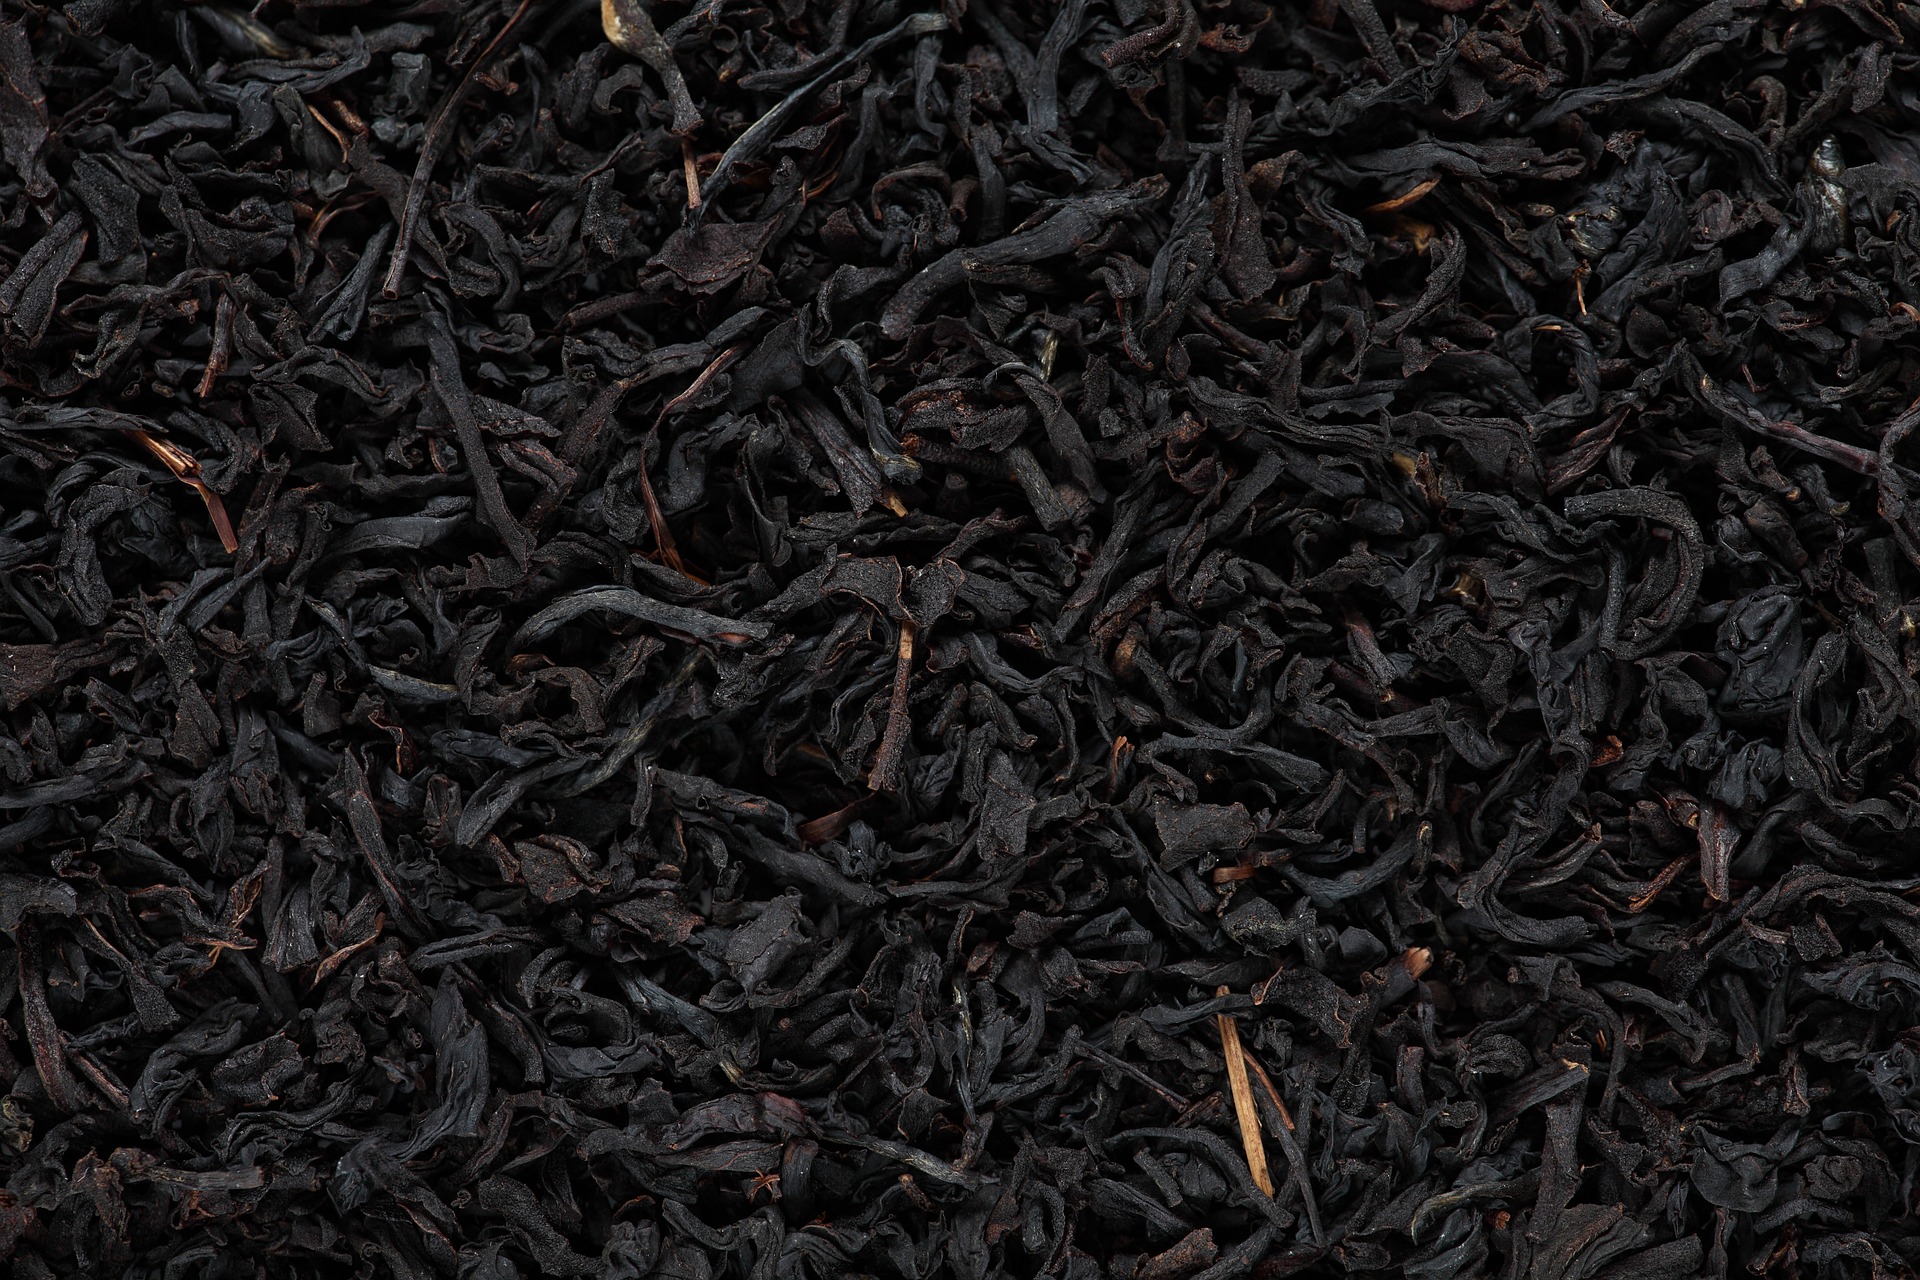 Health benefits of black tea